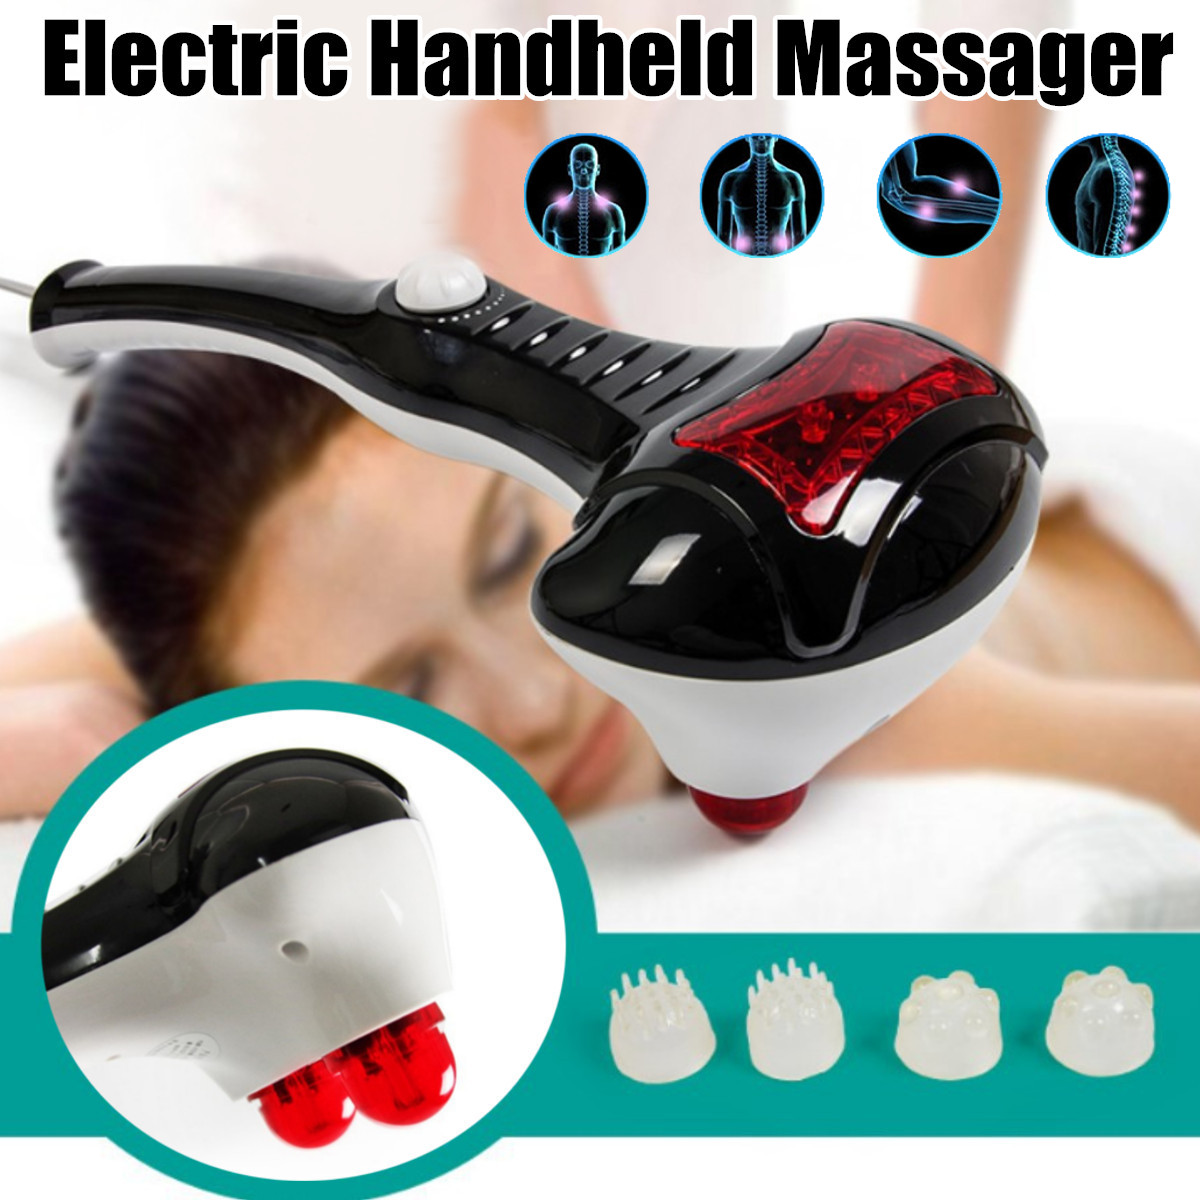 Electric-Handheld-Massager-Infrared-Heating-2-Head-Body-Neck-Back-Vibration-Massage-Hammer-1709977-2